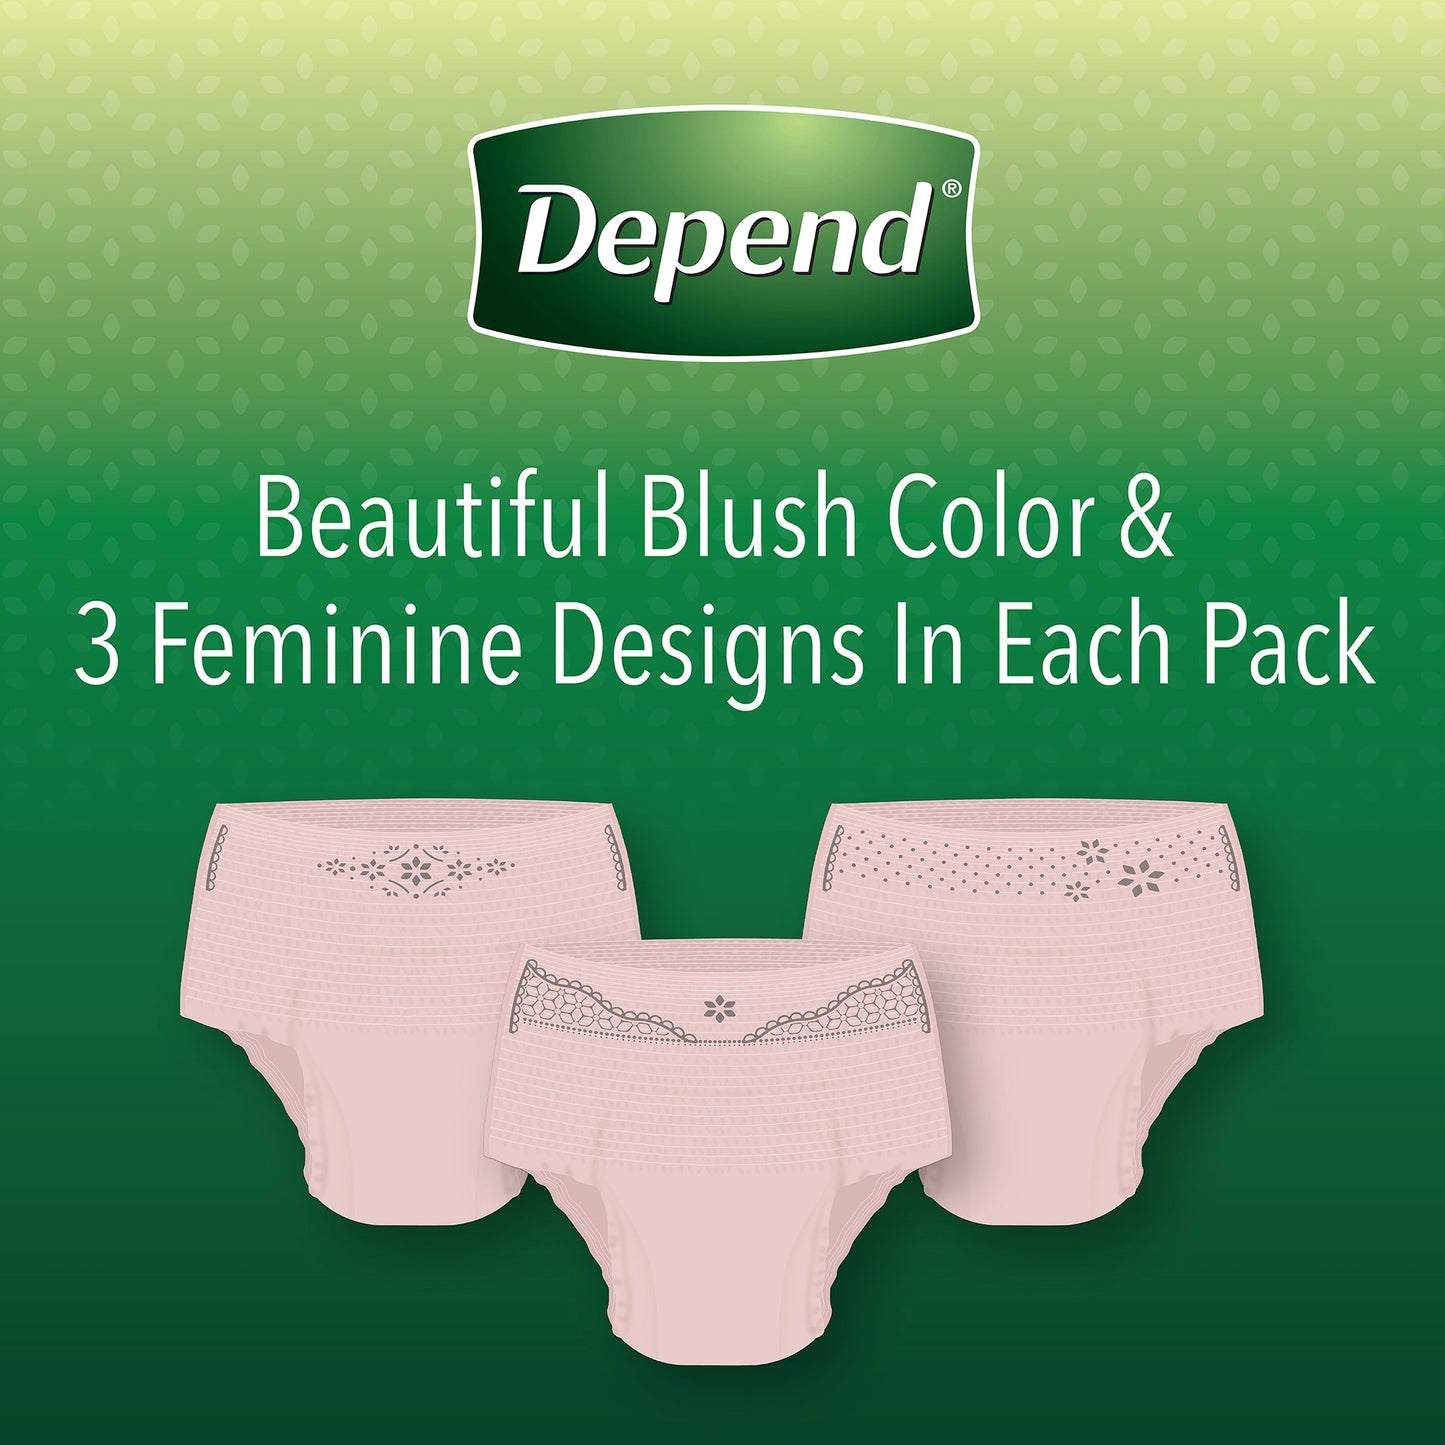 Depend FIT-FLEX Absorbent Underwear, X-Large, Tan, 45" to 54" Waist, 15 ct